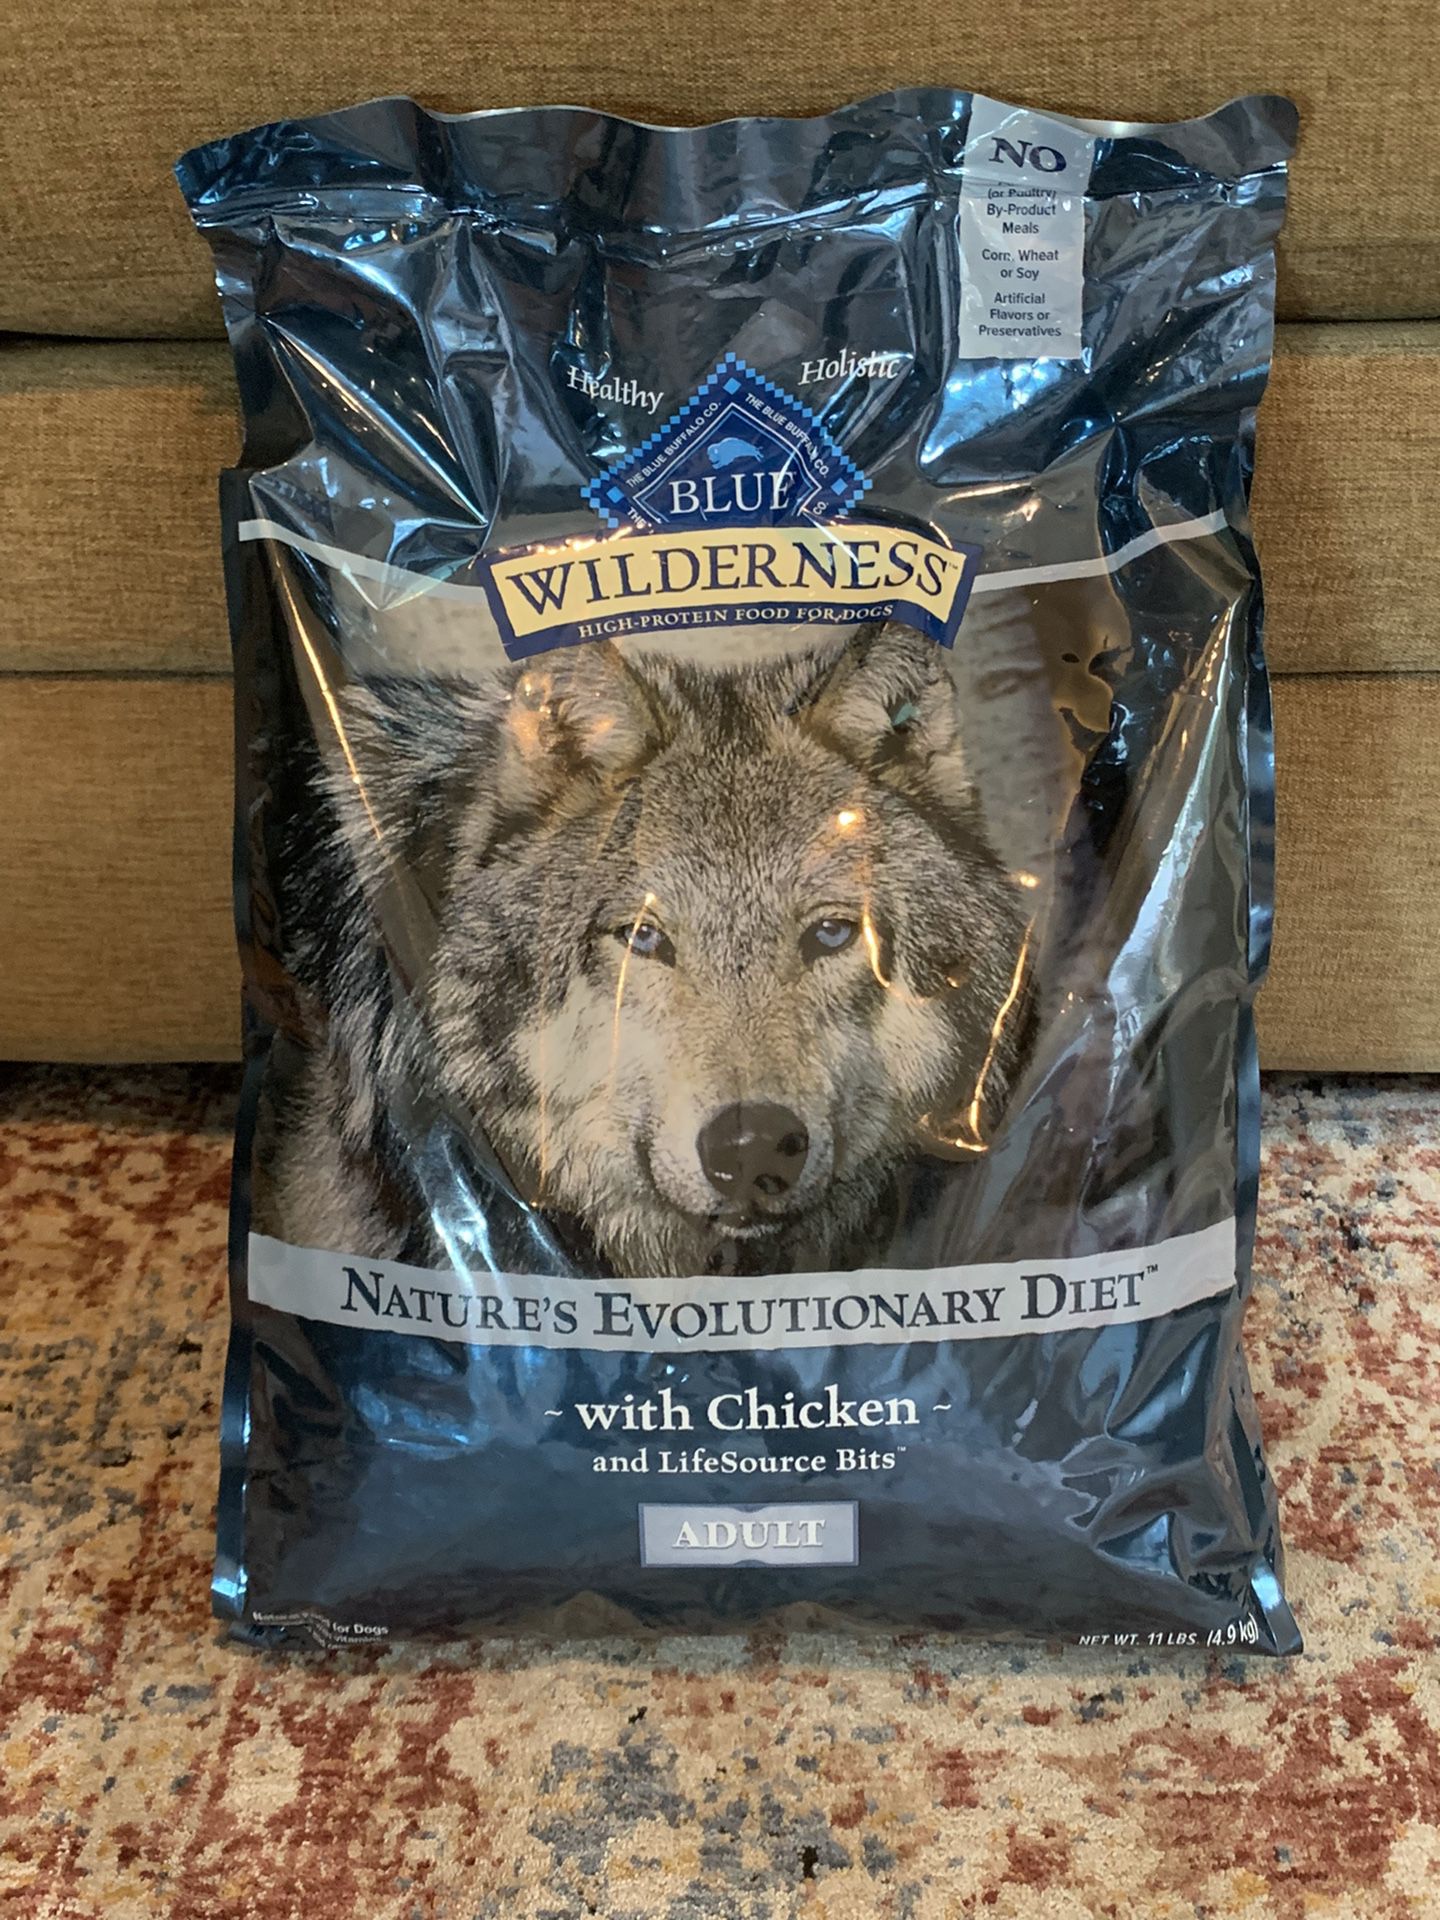 New “Blue Wilderness” dog food